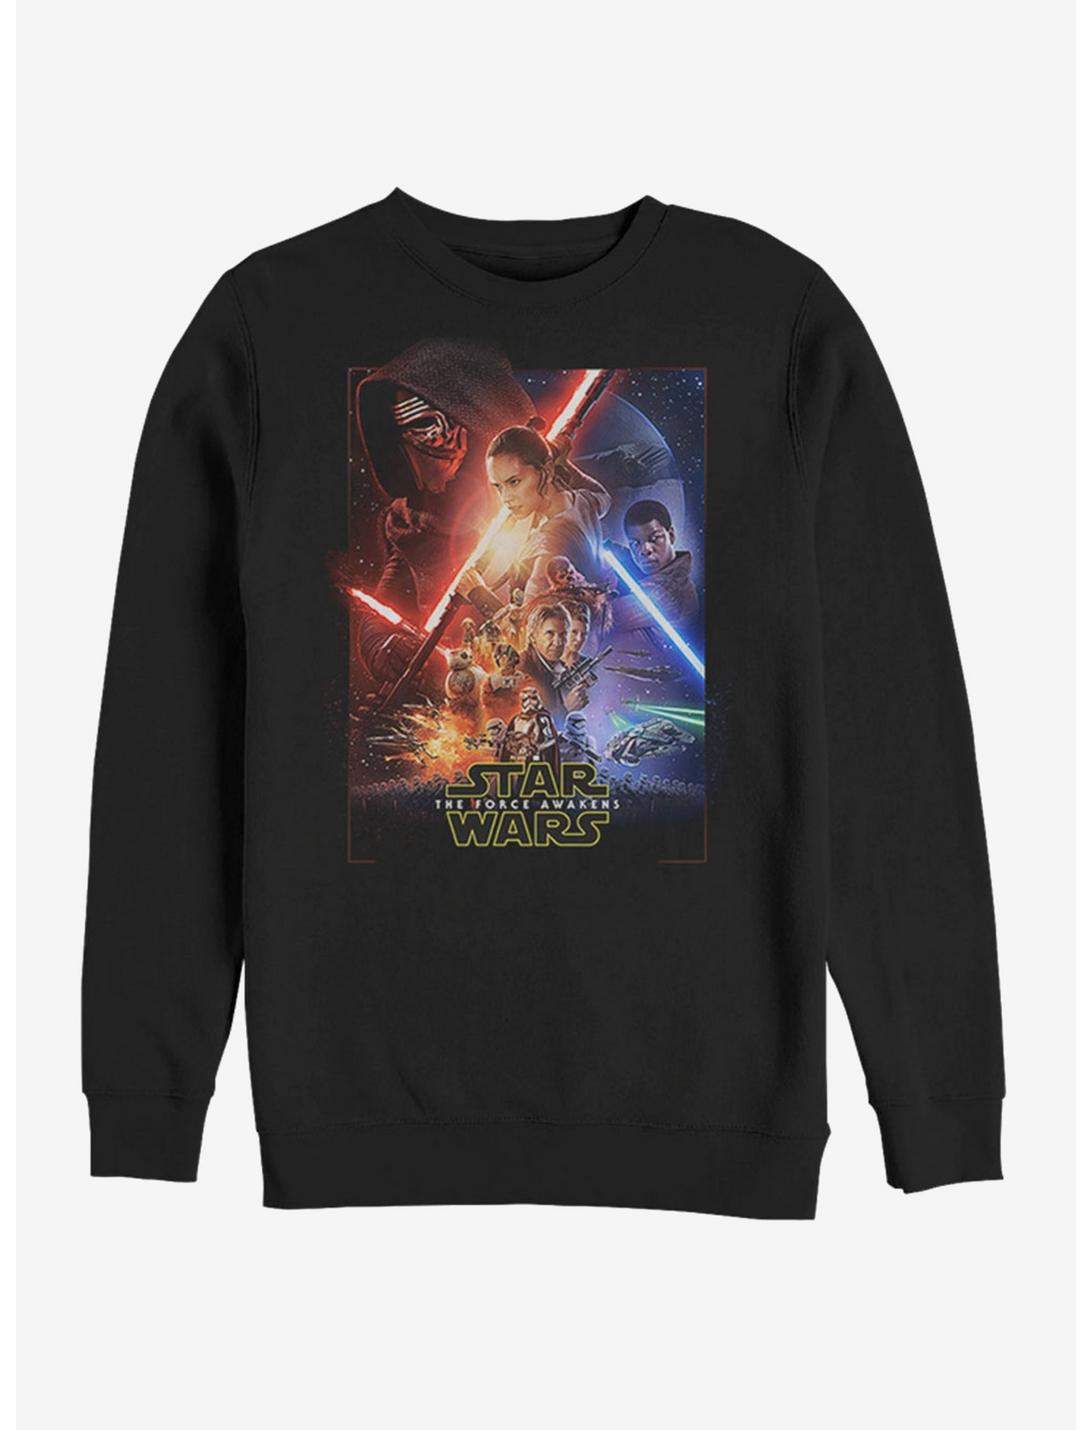 Star Wars Episode VII The Force Awakens Movie Poster Sweatshirt, BLACK, hi-res